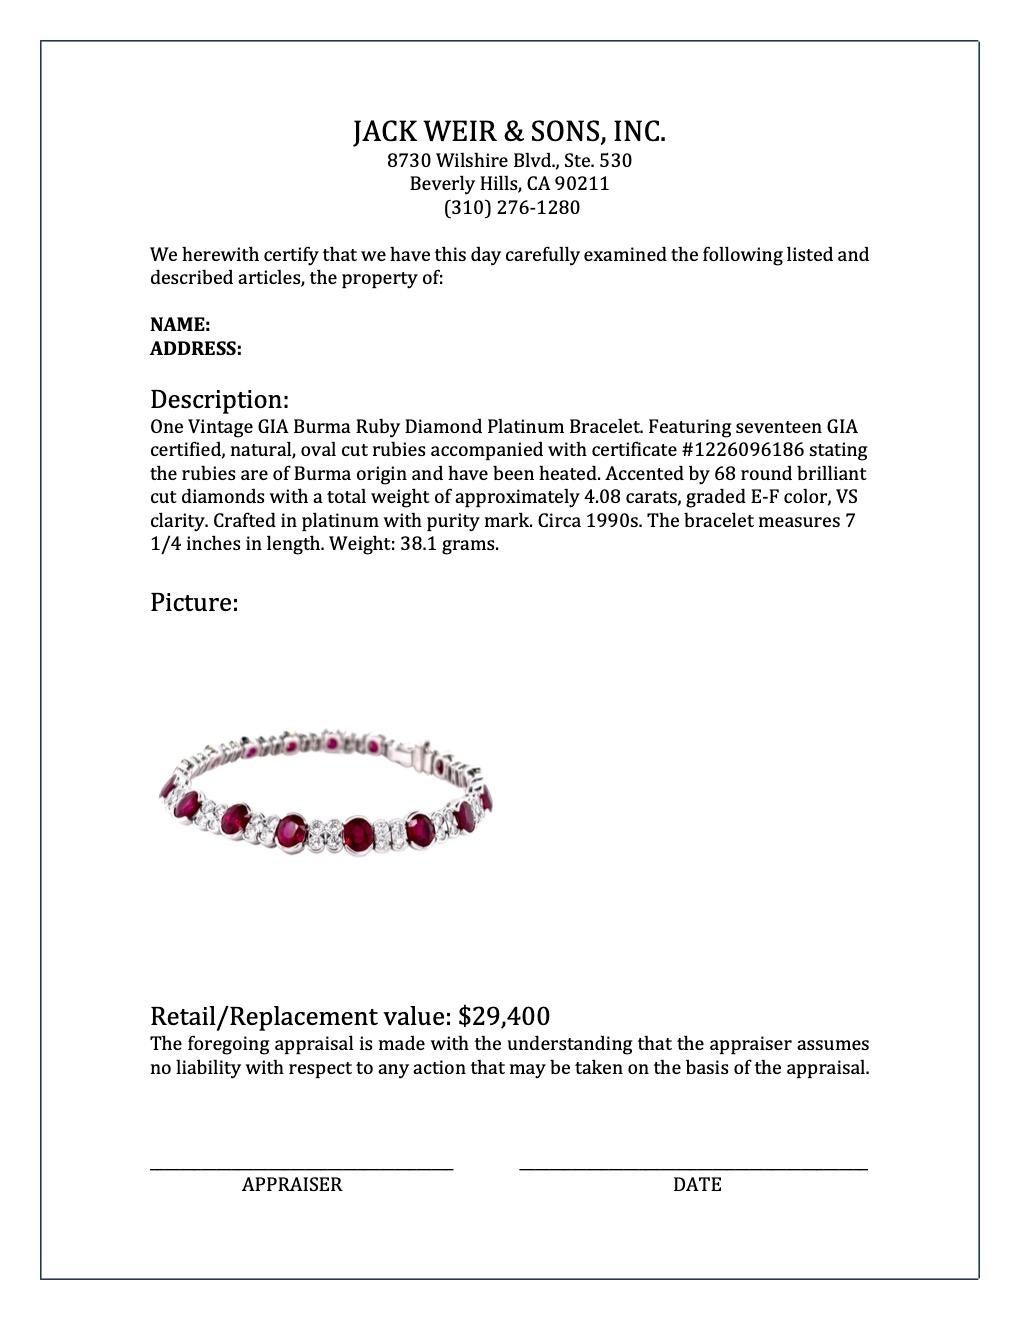 Vintage GIA Burma Ruby Diamond Platinum Bracelet 2